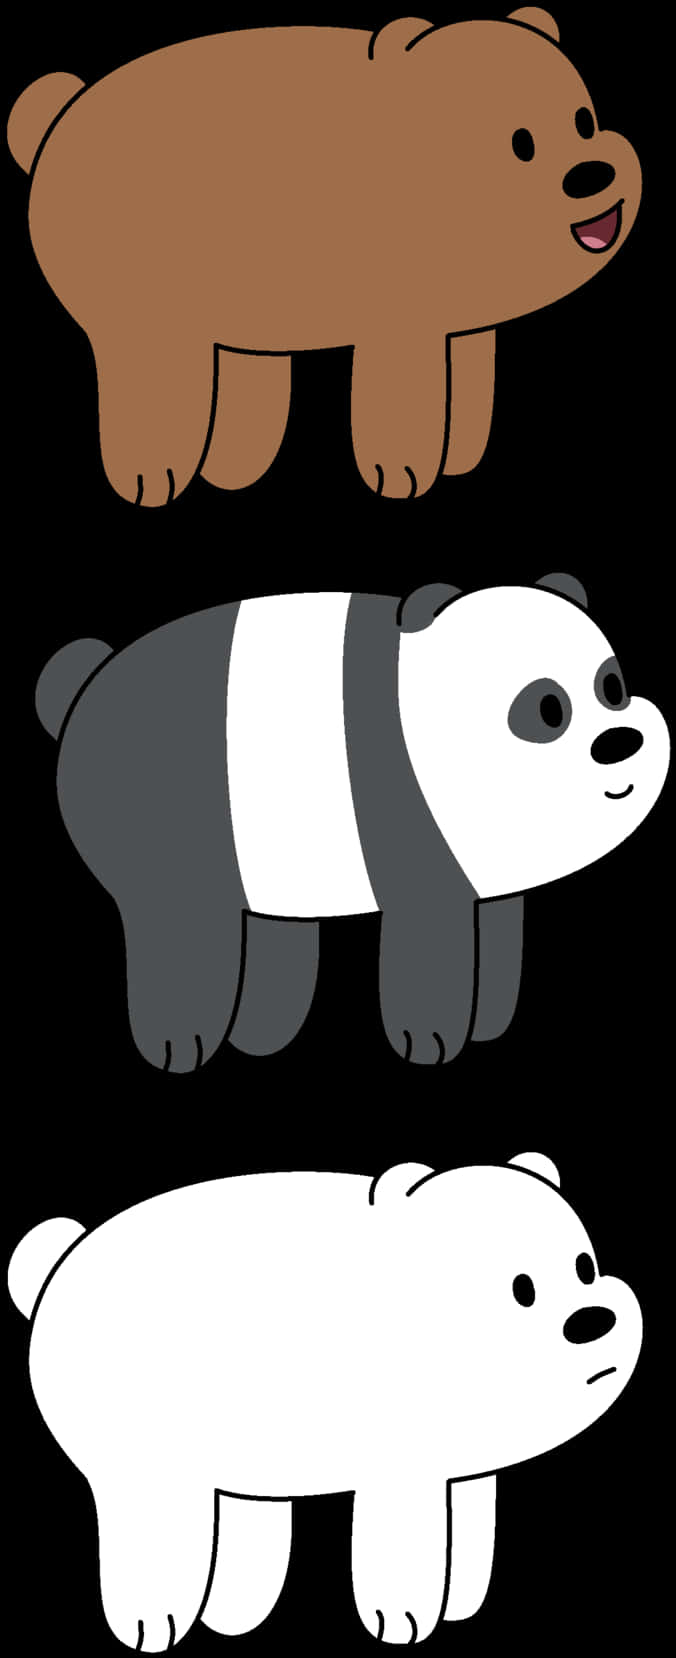 A Cartoon Of A Panda